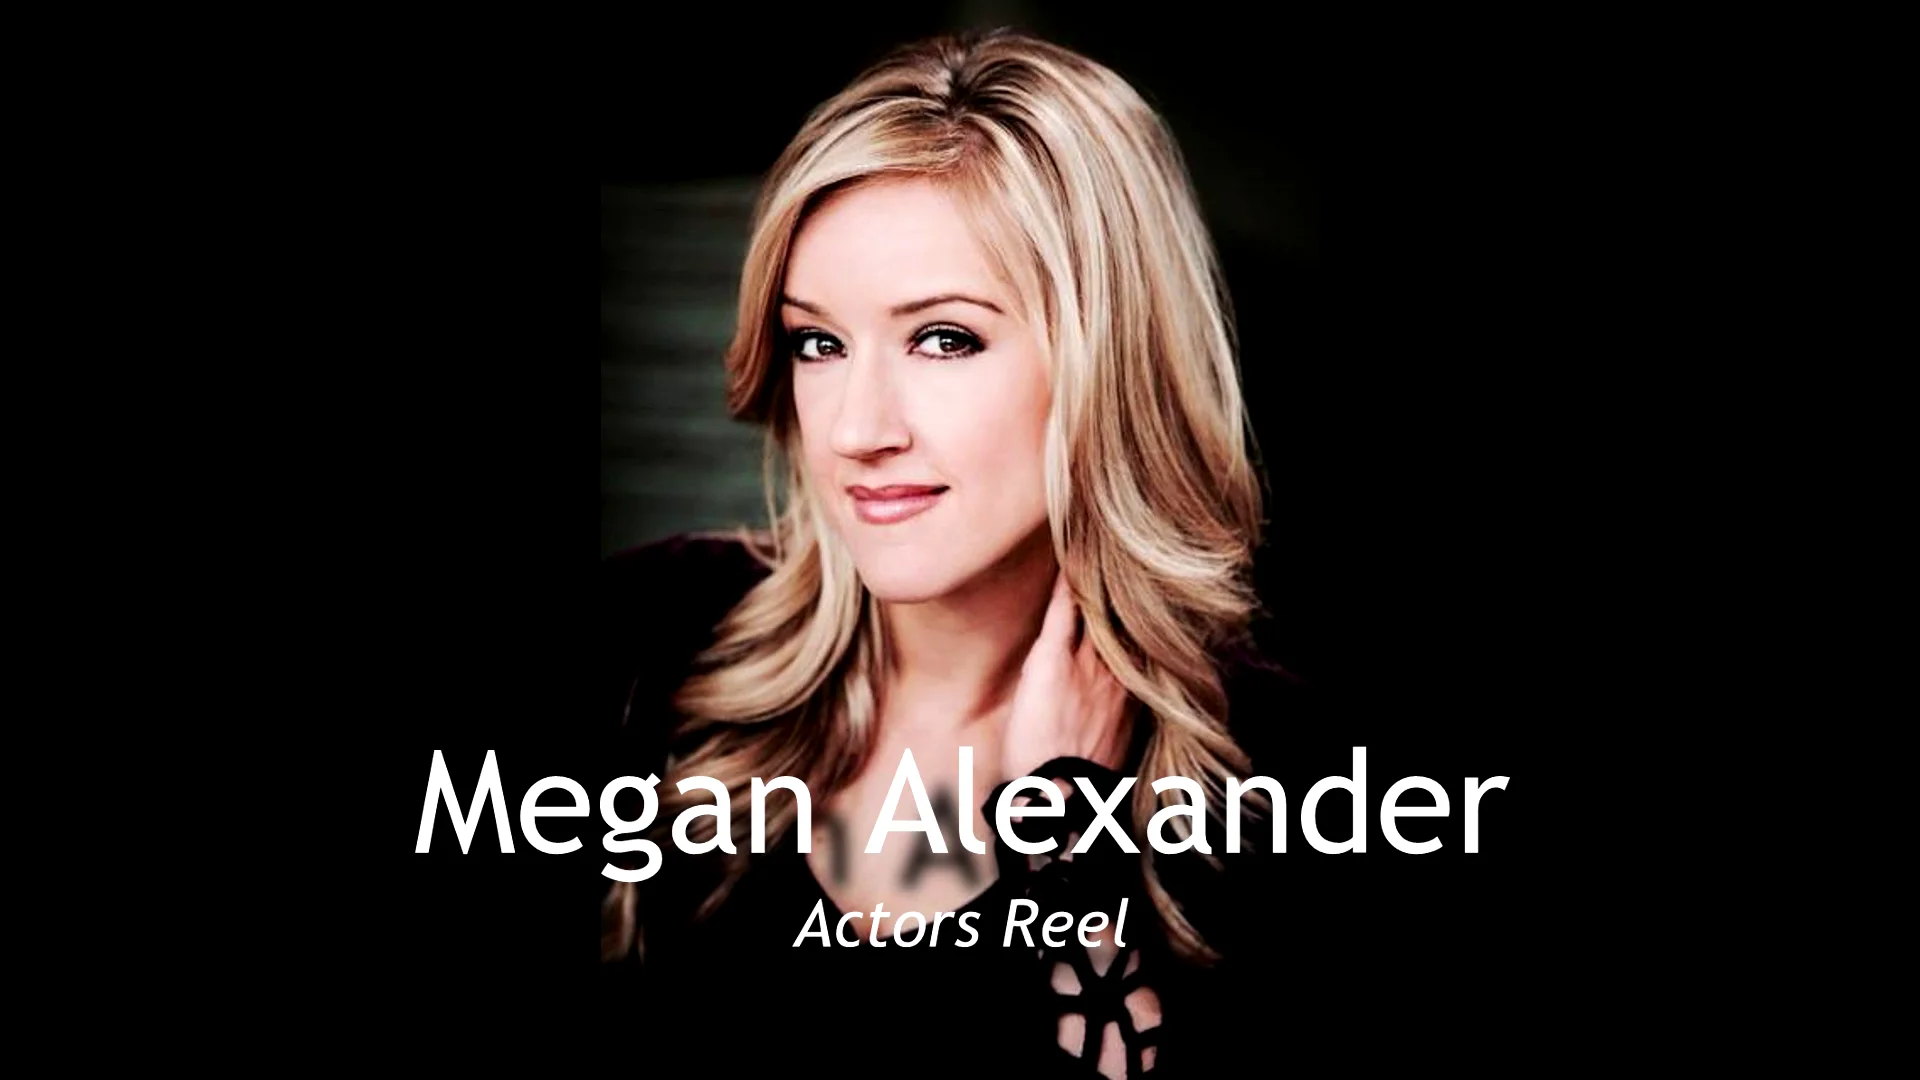 Megan Alexander Actors Reel on Vimeo